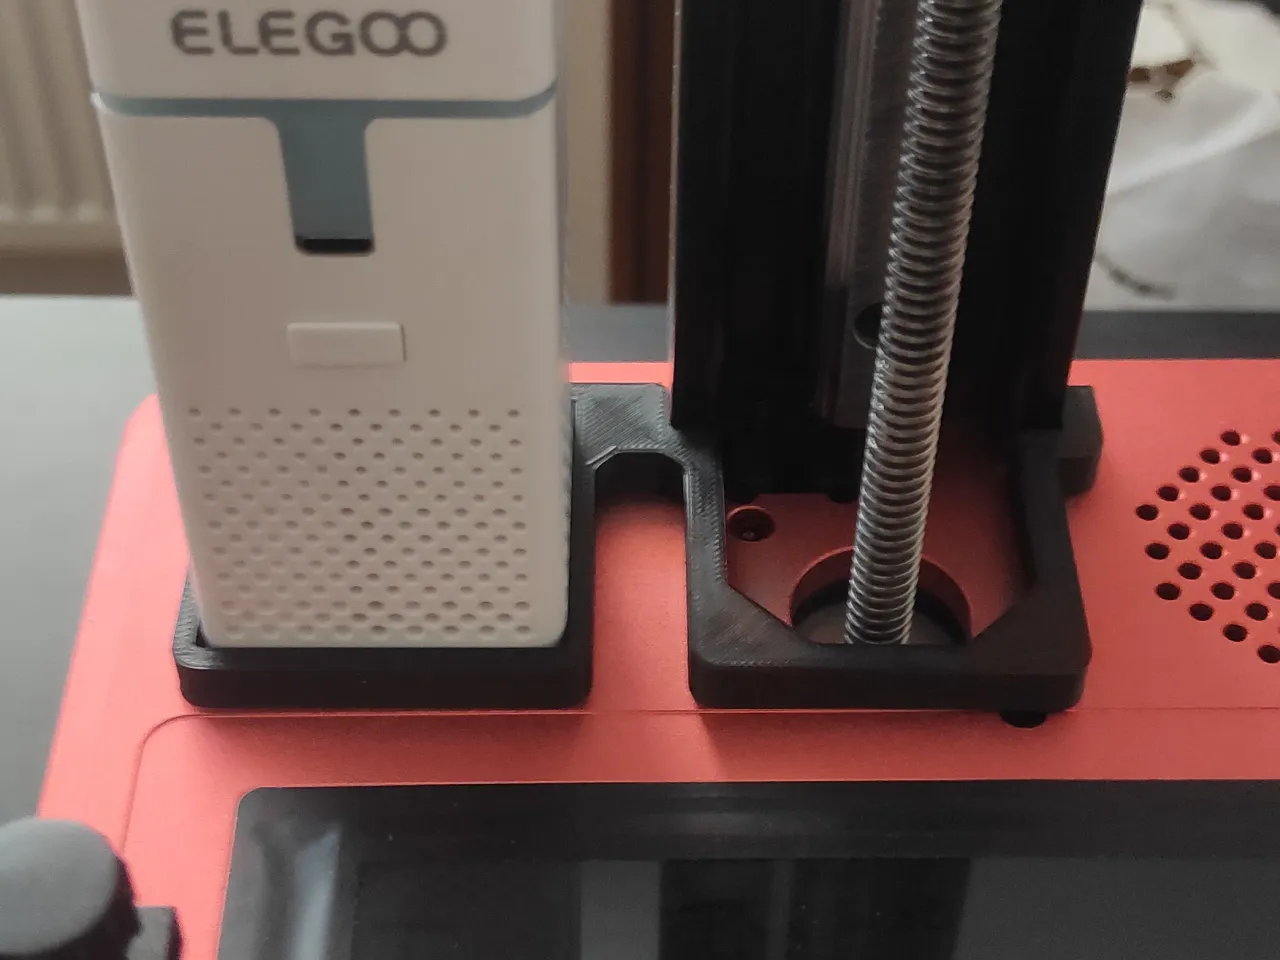 Elegoo MINI Air purifier holder and vat spacer for Elegoo Mars 2 Pro